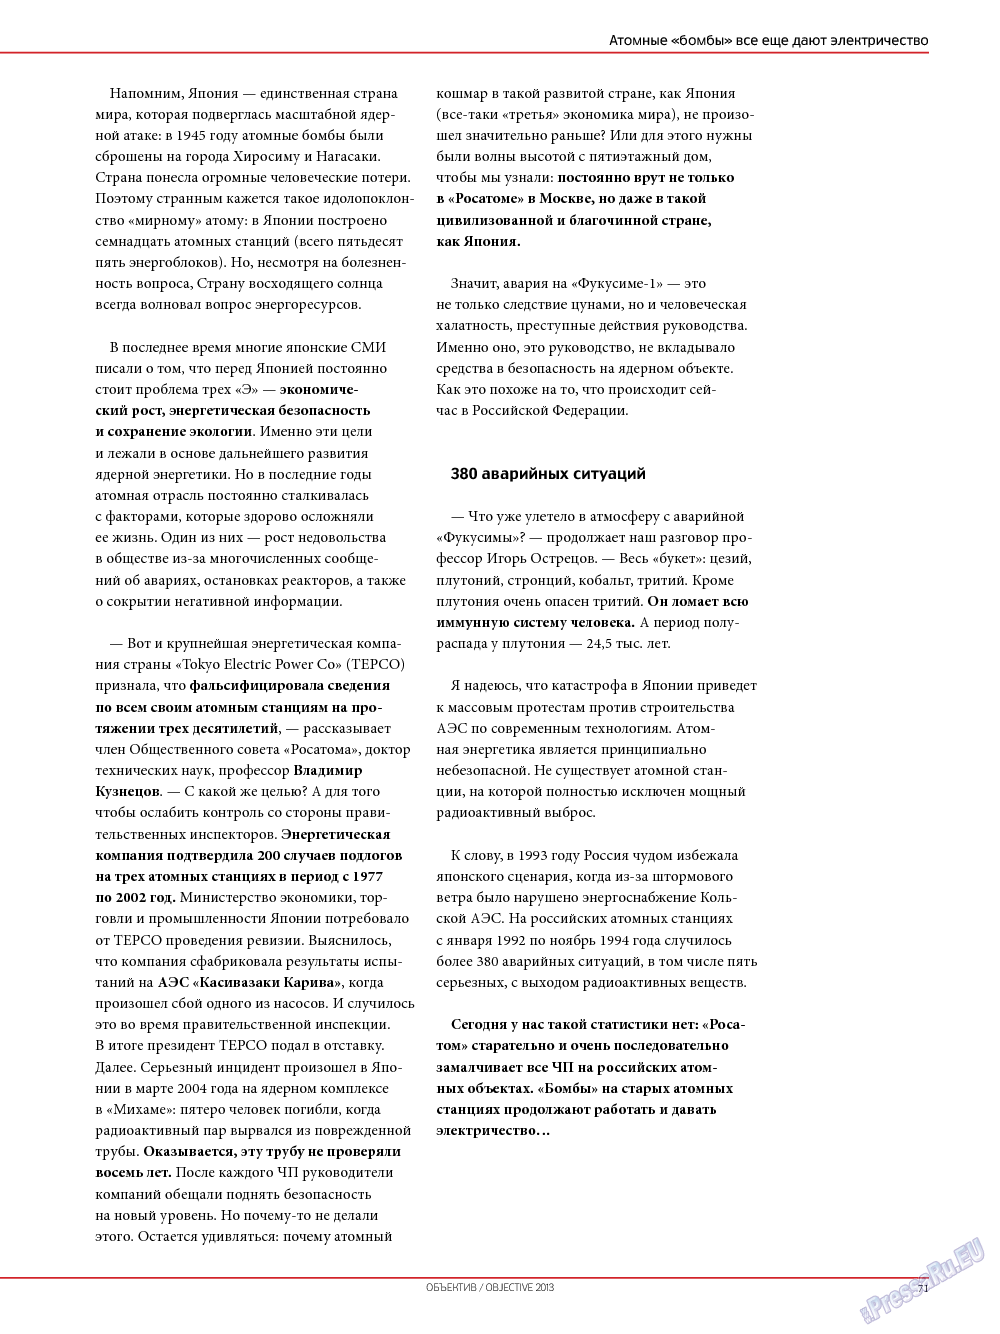 Объектив EU, журнал. 2013 №3 стр.73